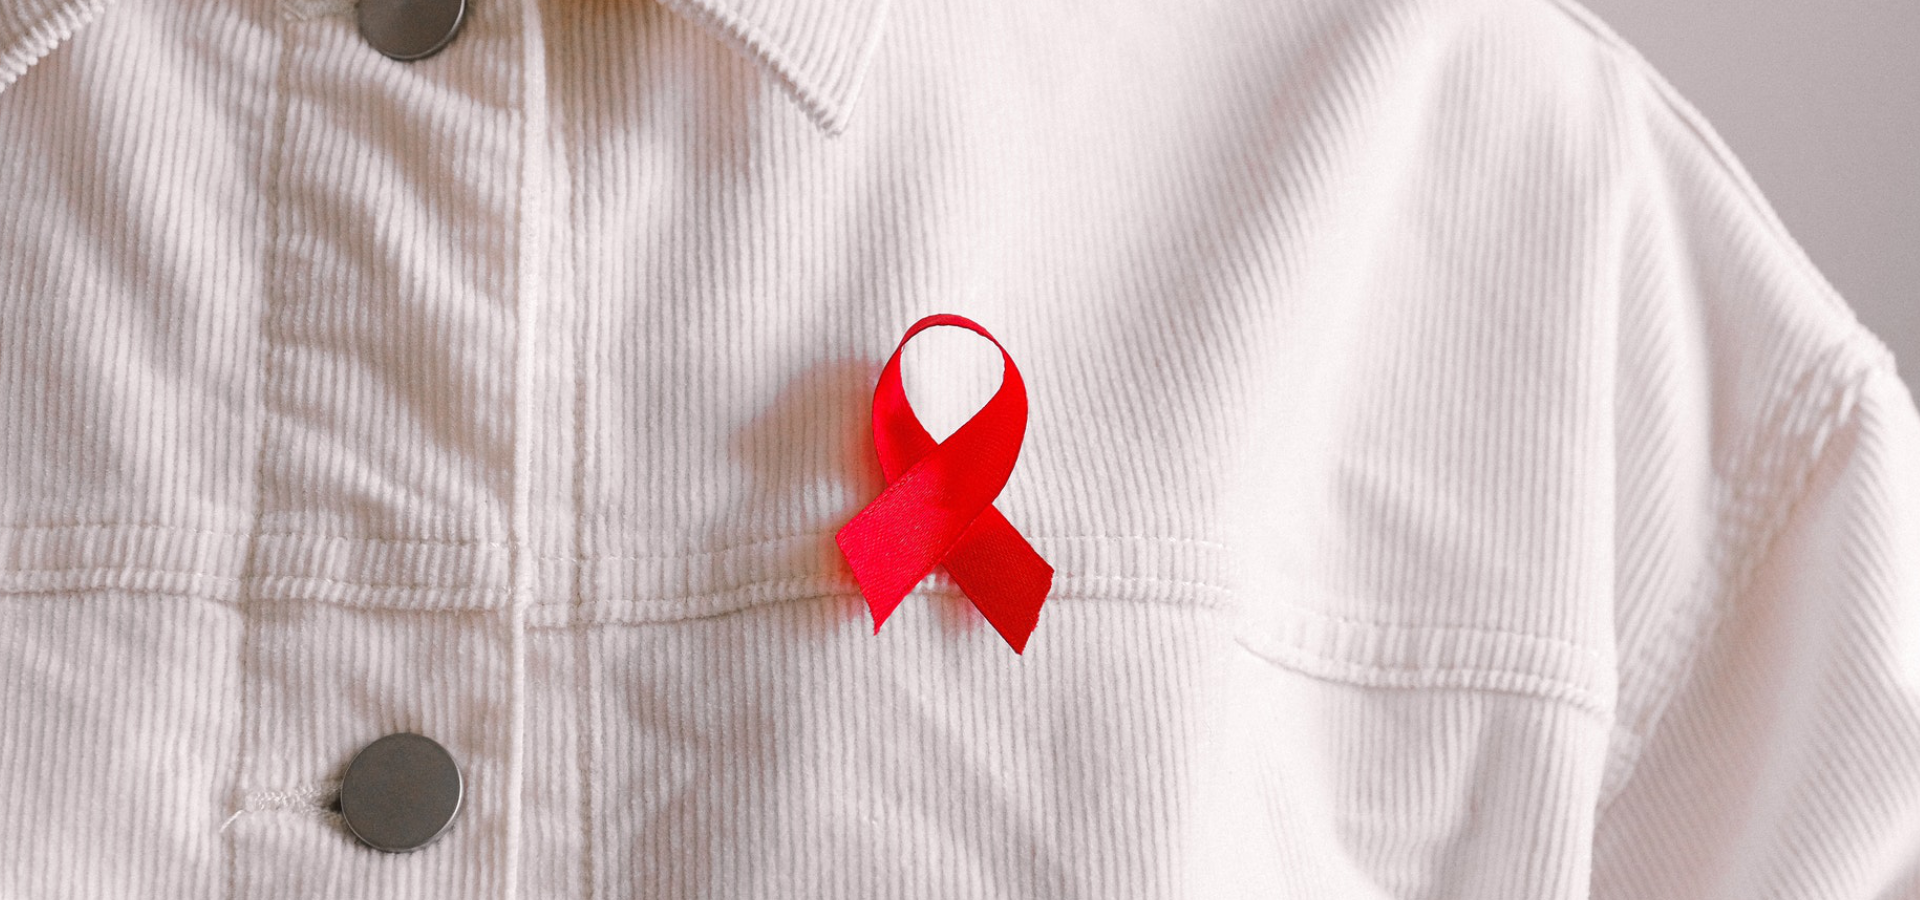 HIV: there is room to improve the criteria used for prescribing PrEP